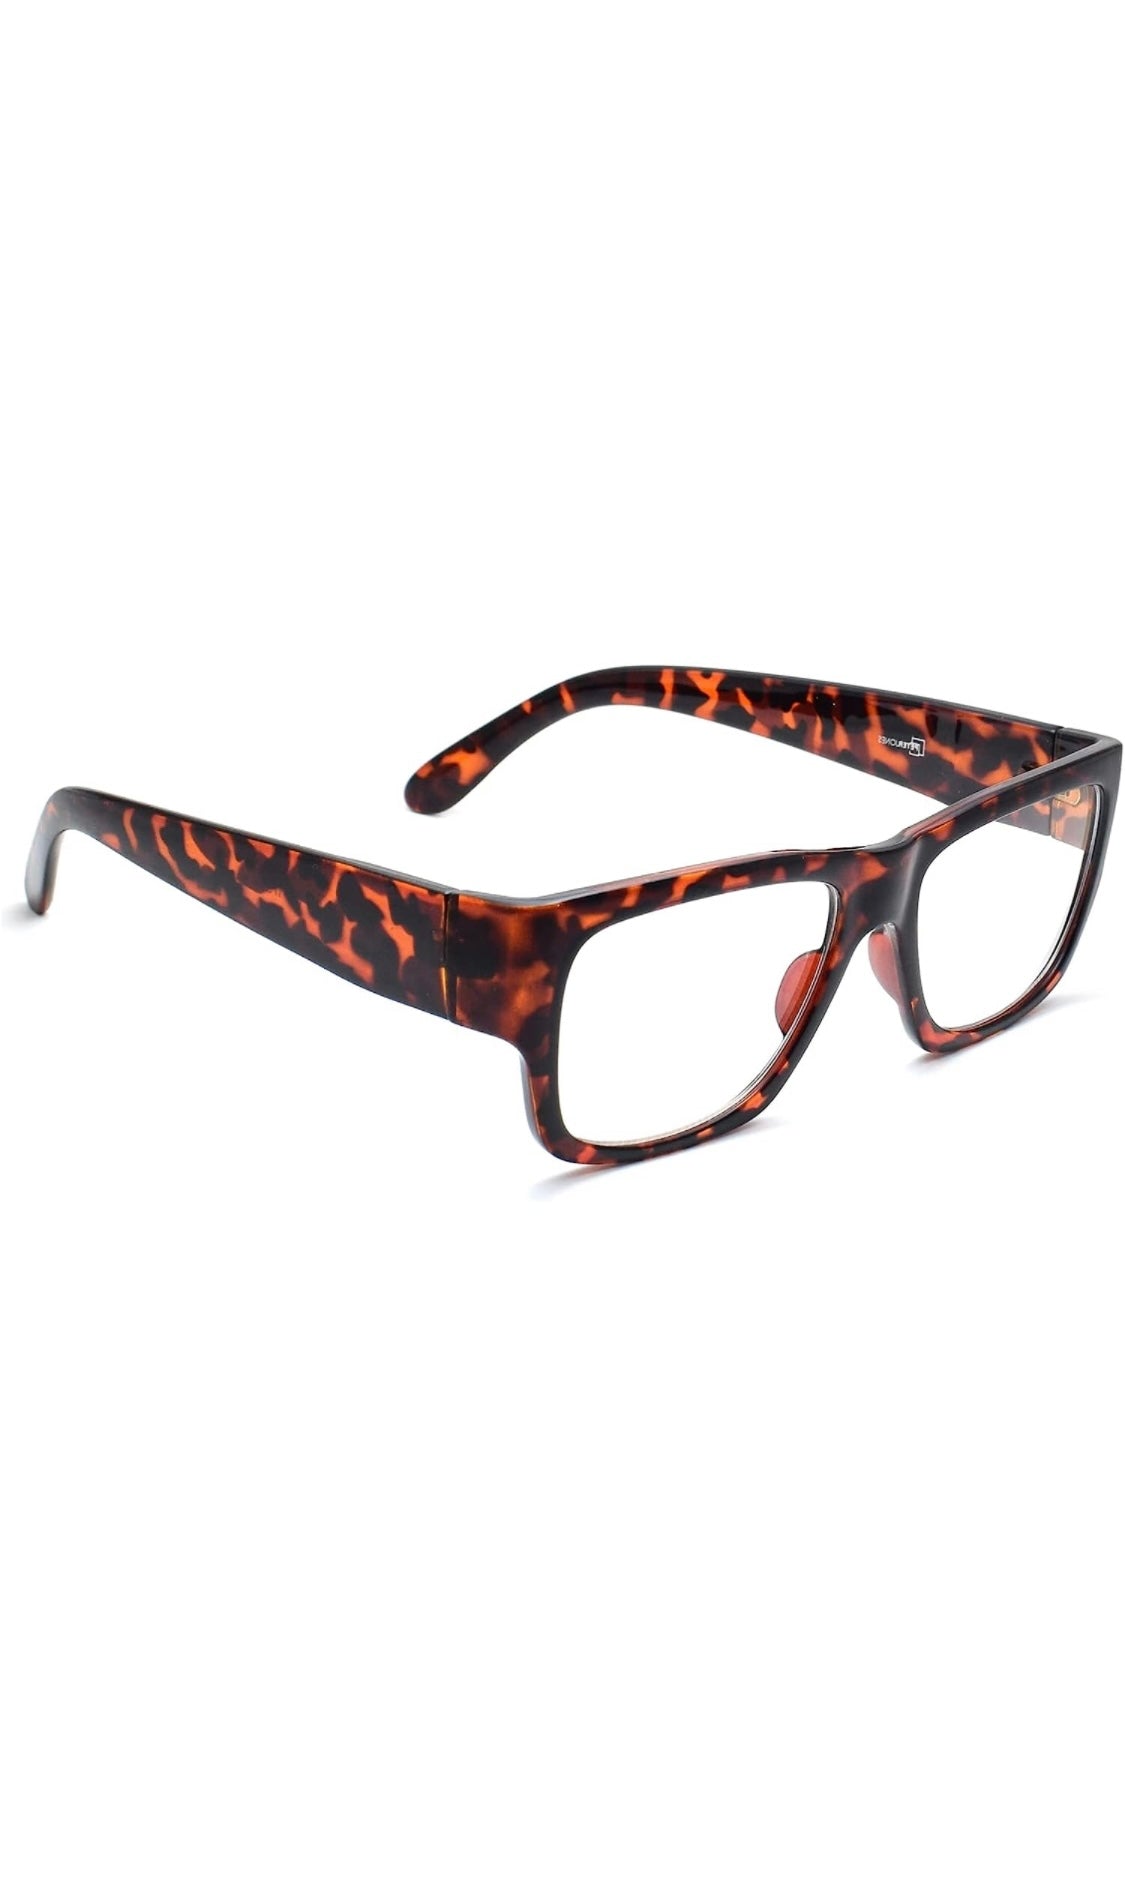 Jodykoes Thick Frame Unisex Anti Glare Eyeglasses Eyewear Spectacle (Leopard Print) - Jodykoes ®